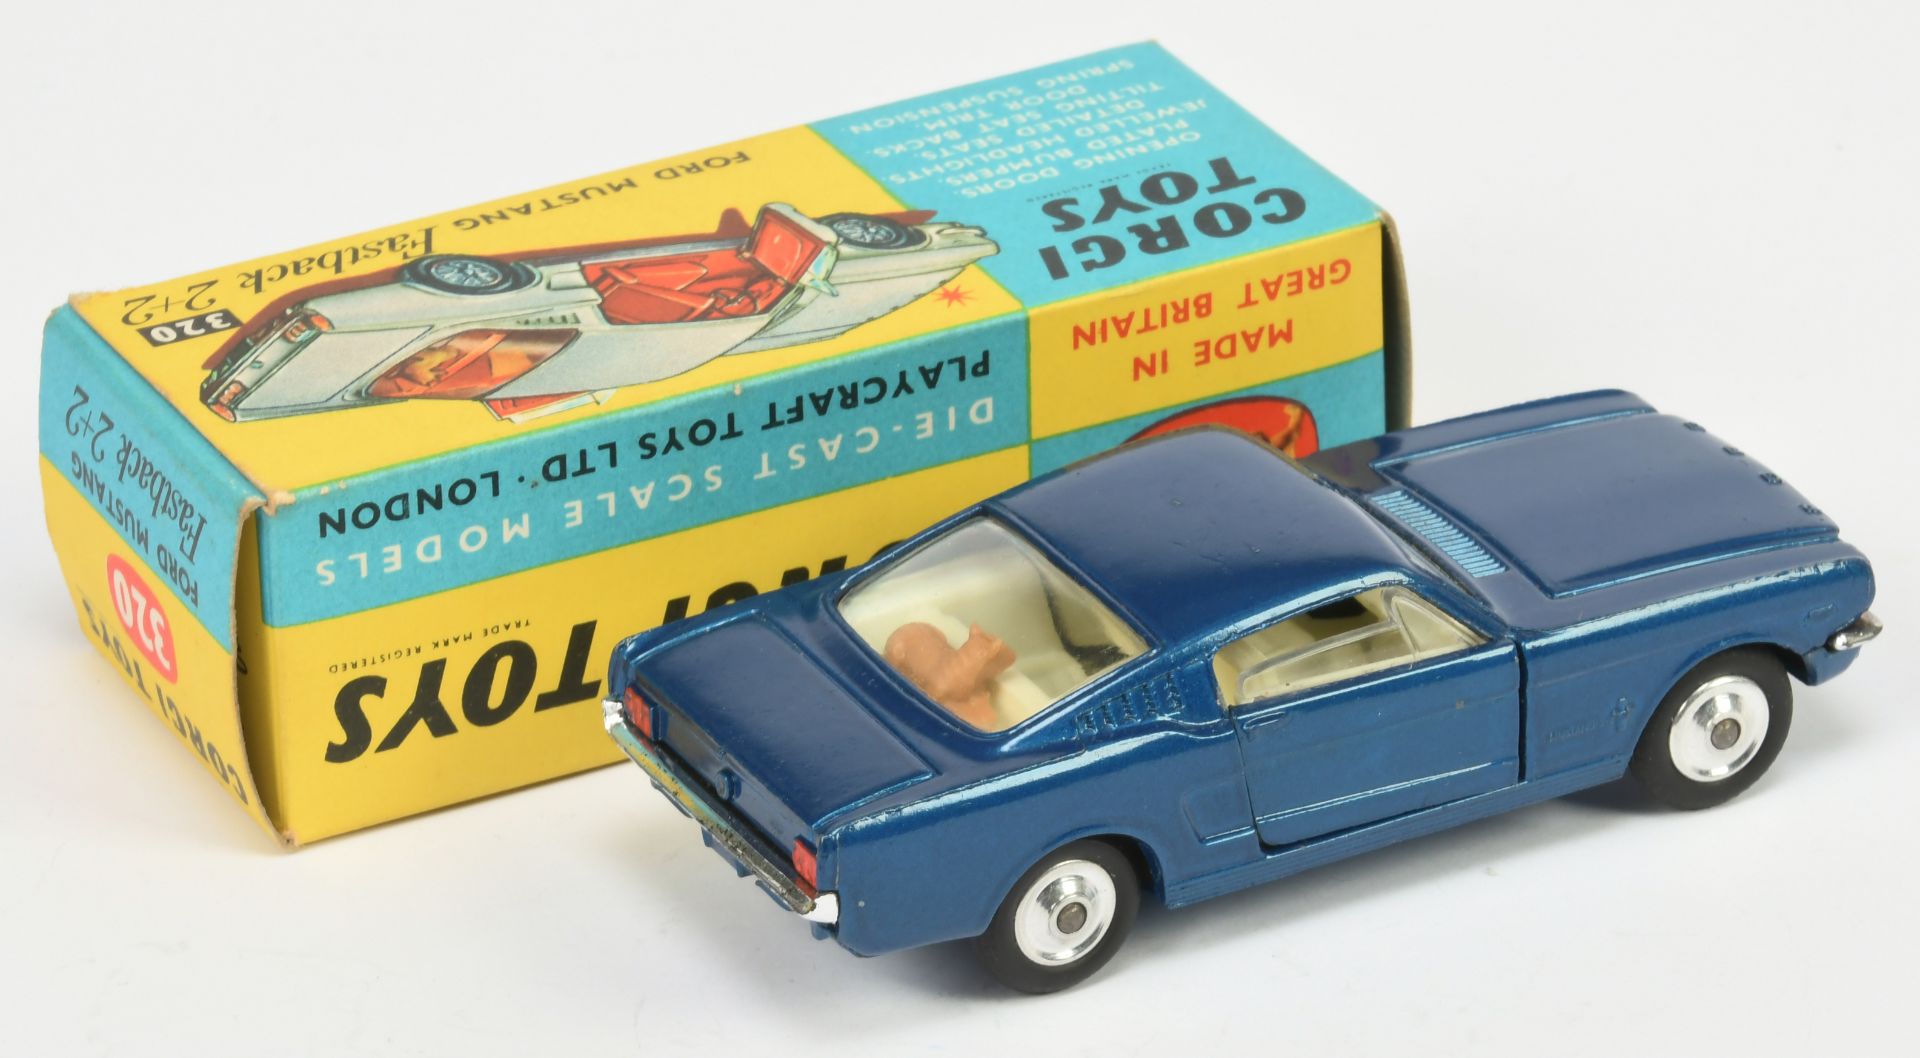 Corgi Toys 320 Ford Mustang Fastback  - Blue body, ivory interior with dog figure, chrome trim an... - Bild 2 aus 2